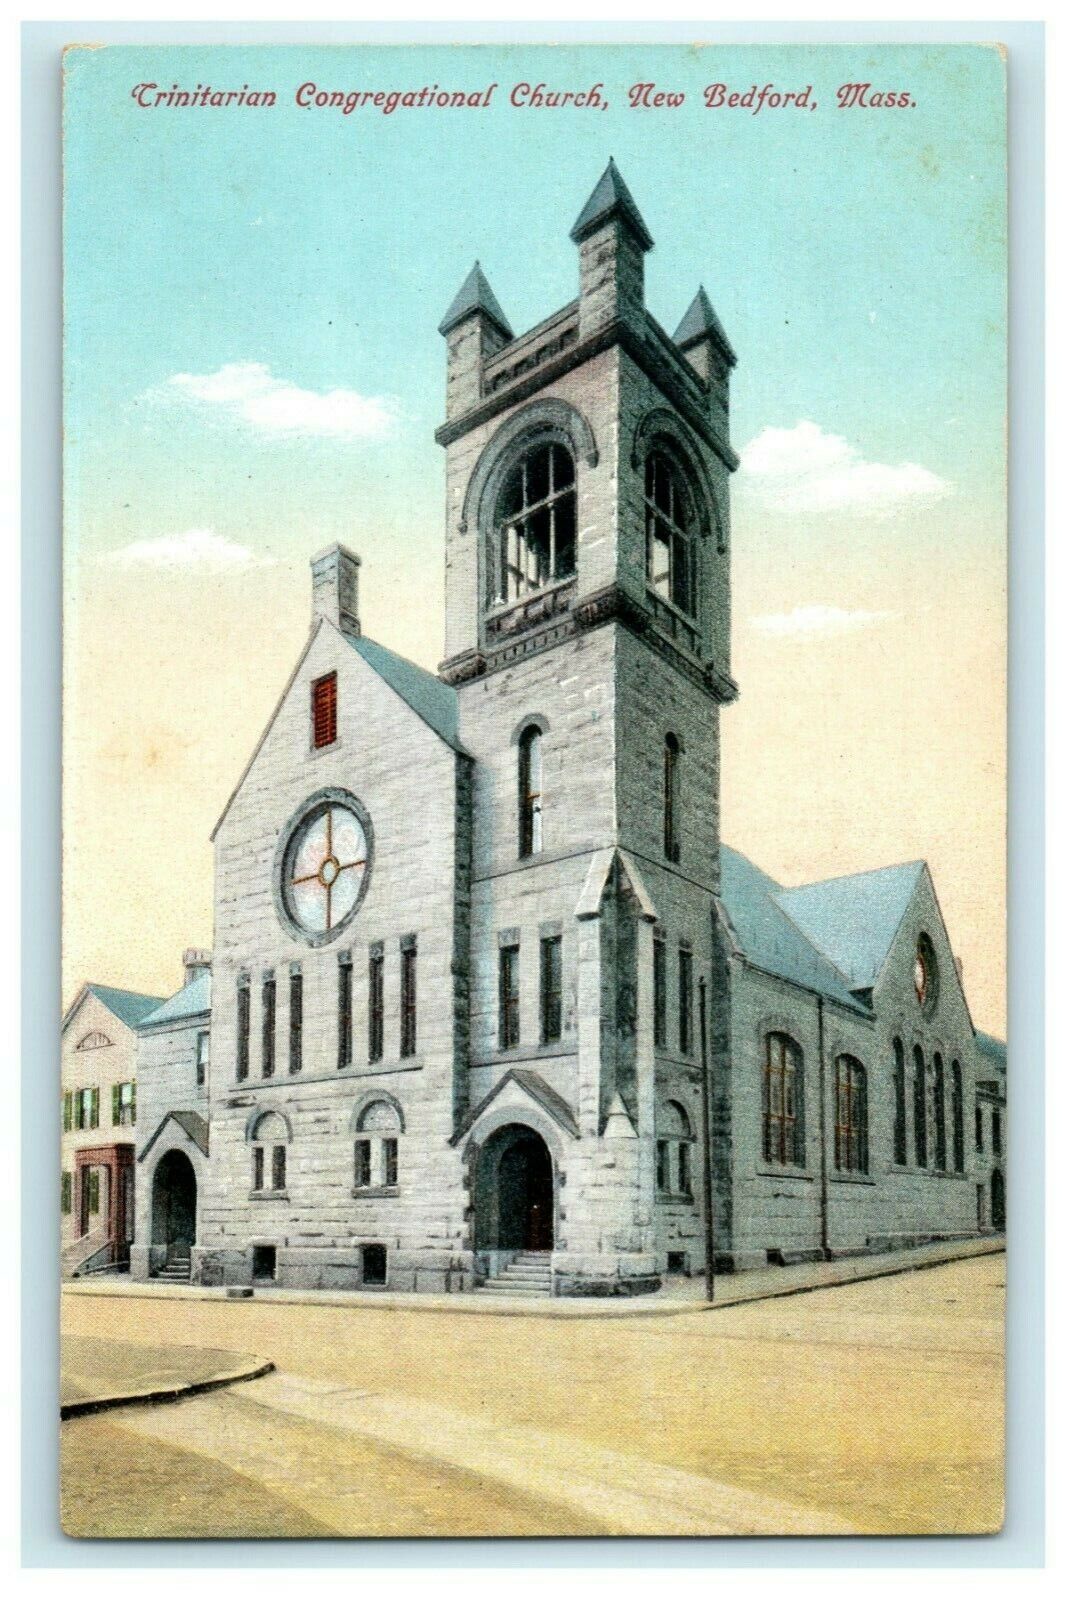 Trinitarian Congregational Church New Bedford Mass. Vintage Antique Postcard